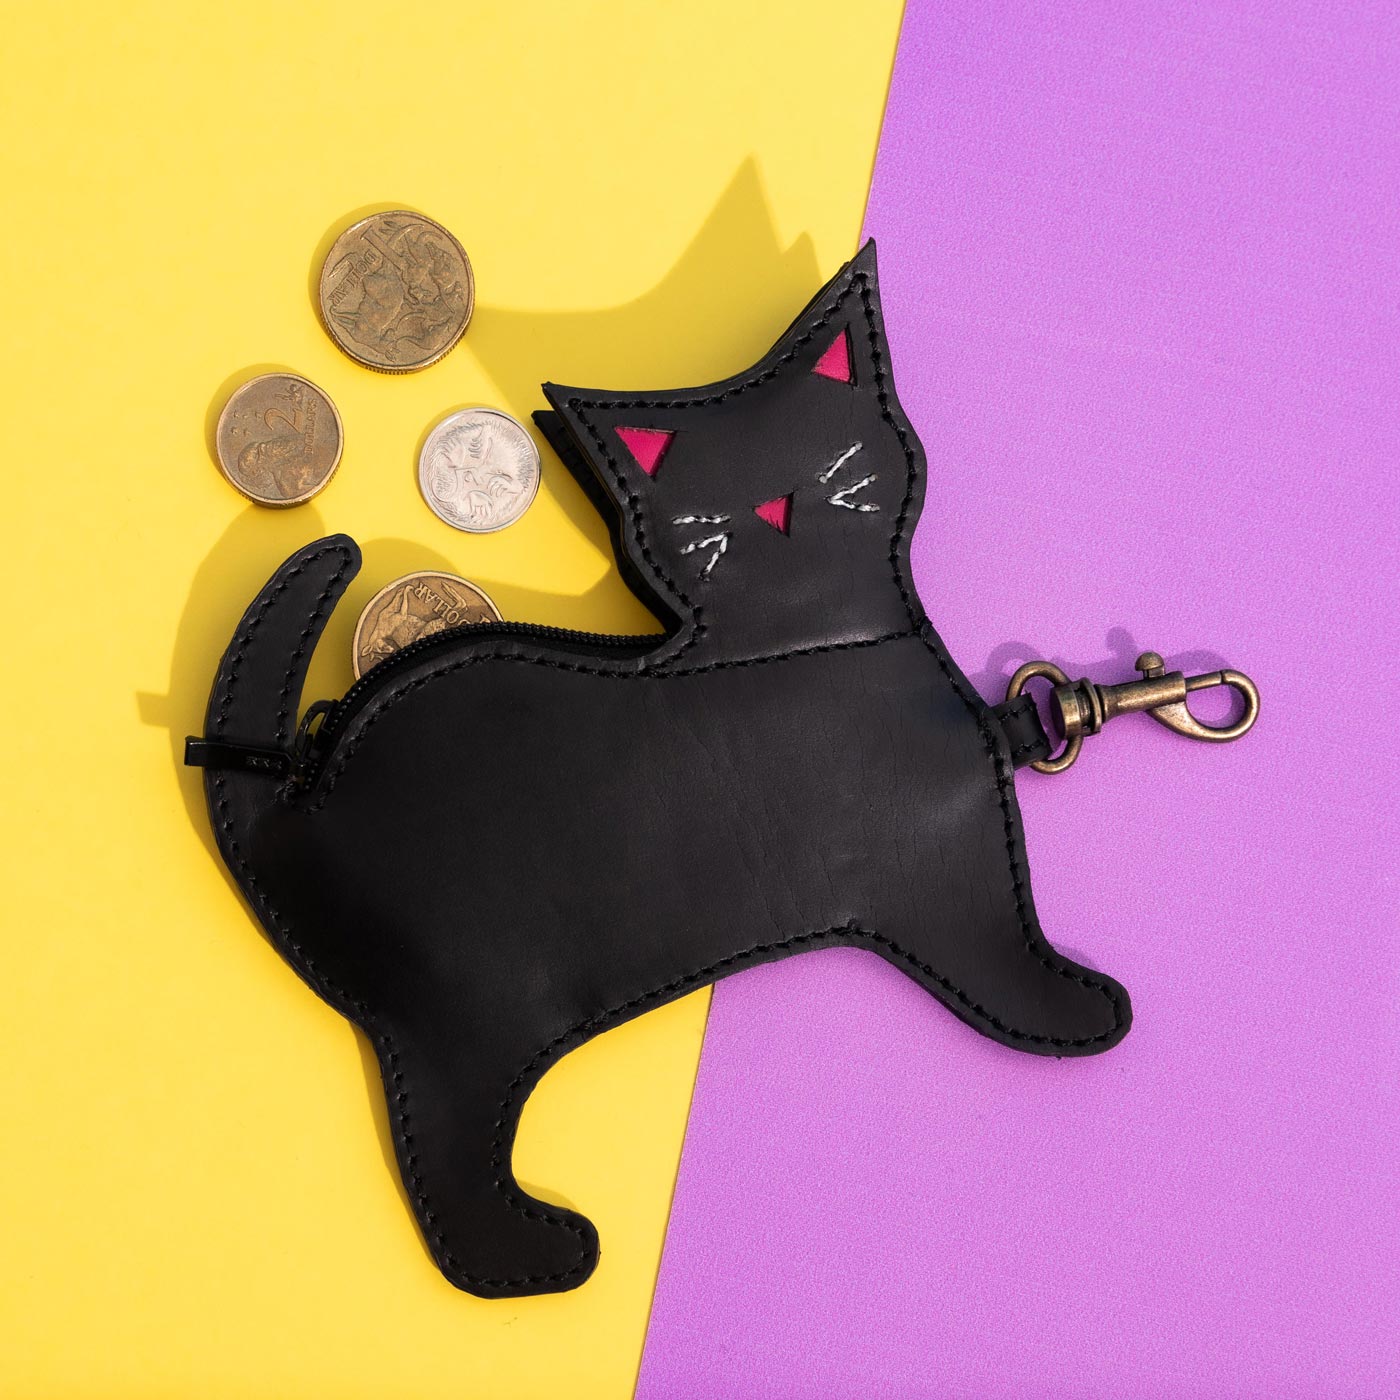 Wicker Darling's black cat coin purse